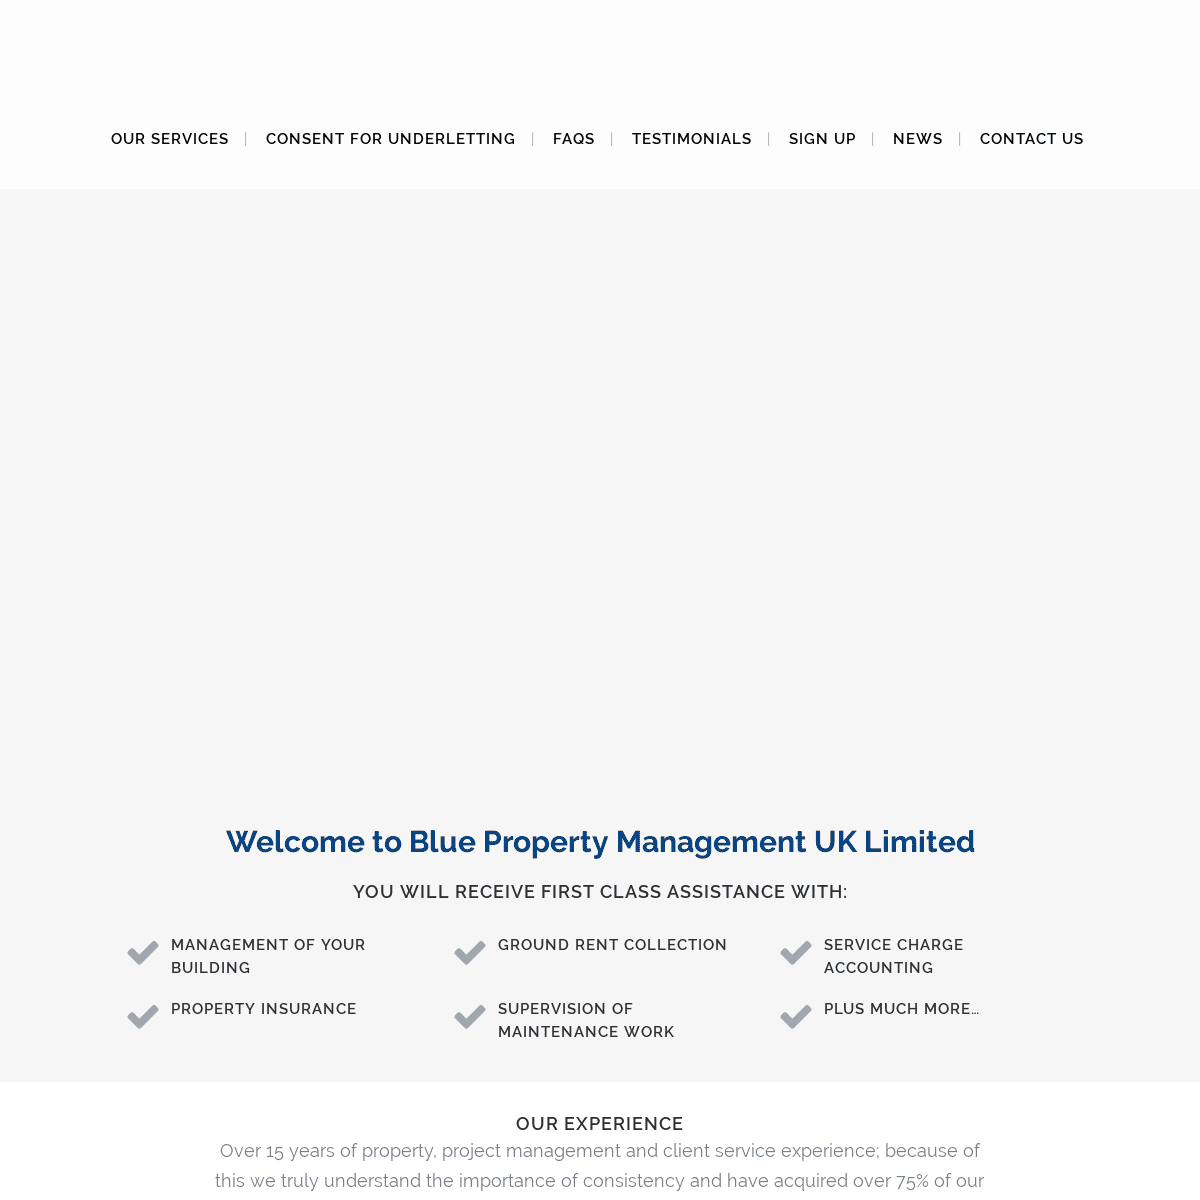 A complete backup of bluepropertymanagementuk.com